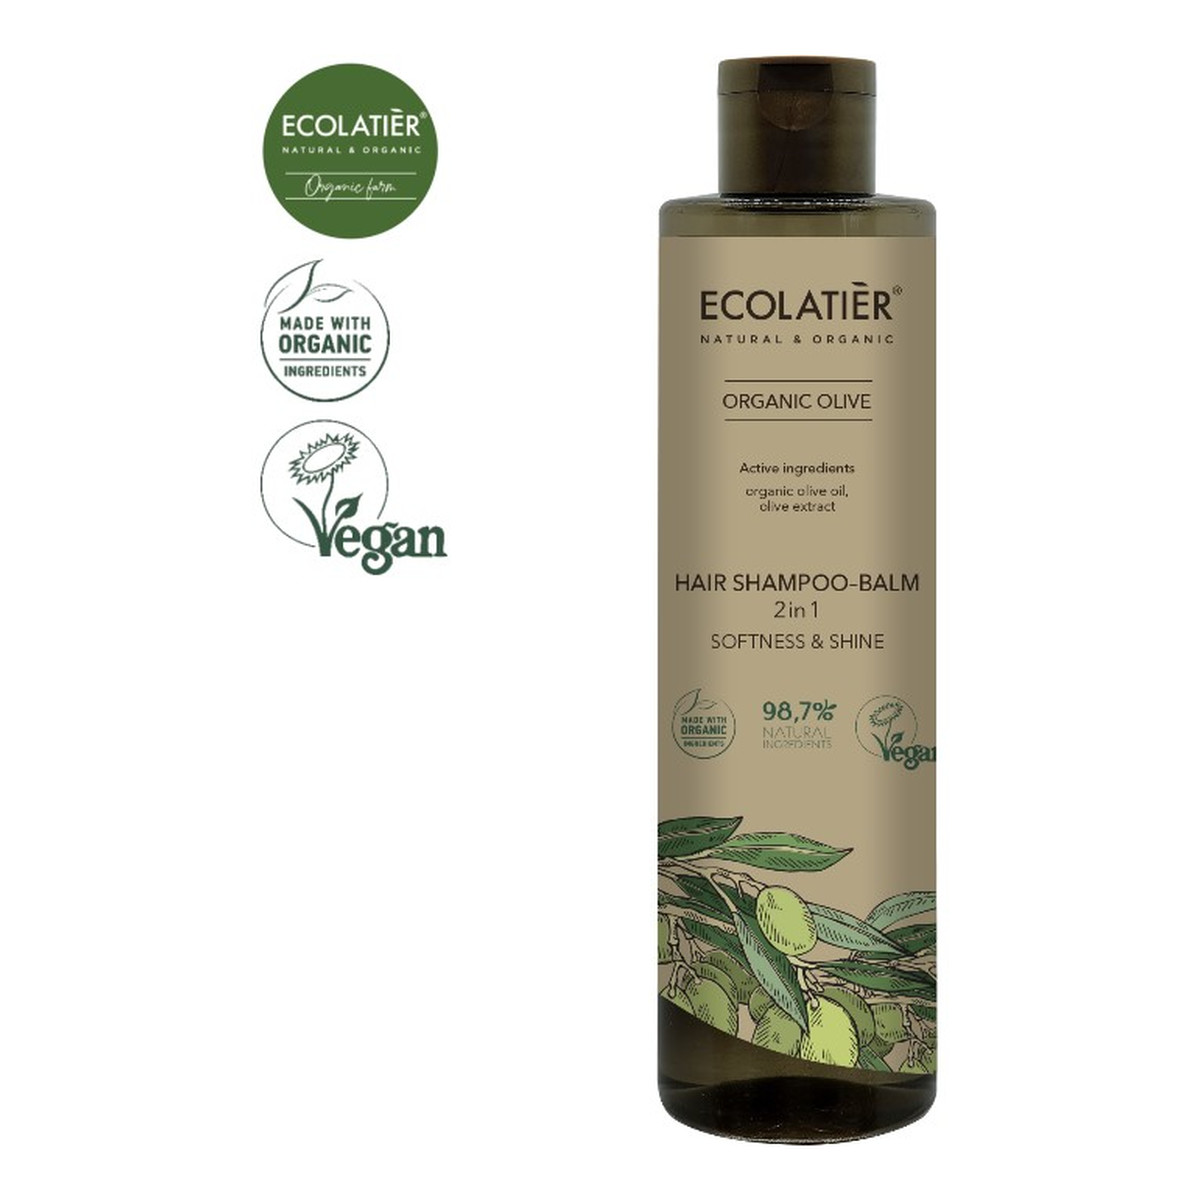 Ecolatier Olive Szampon-balsam 2 w 1 350ml